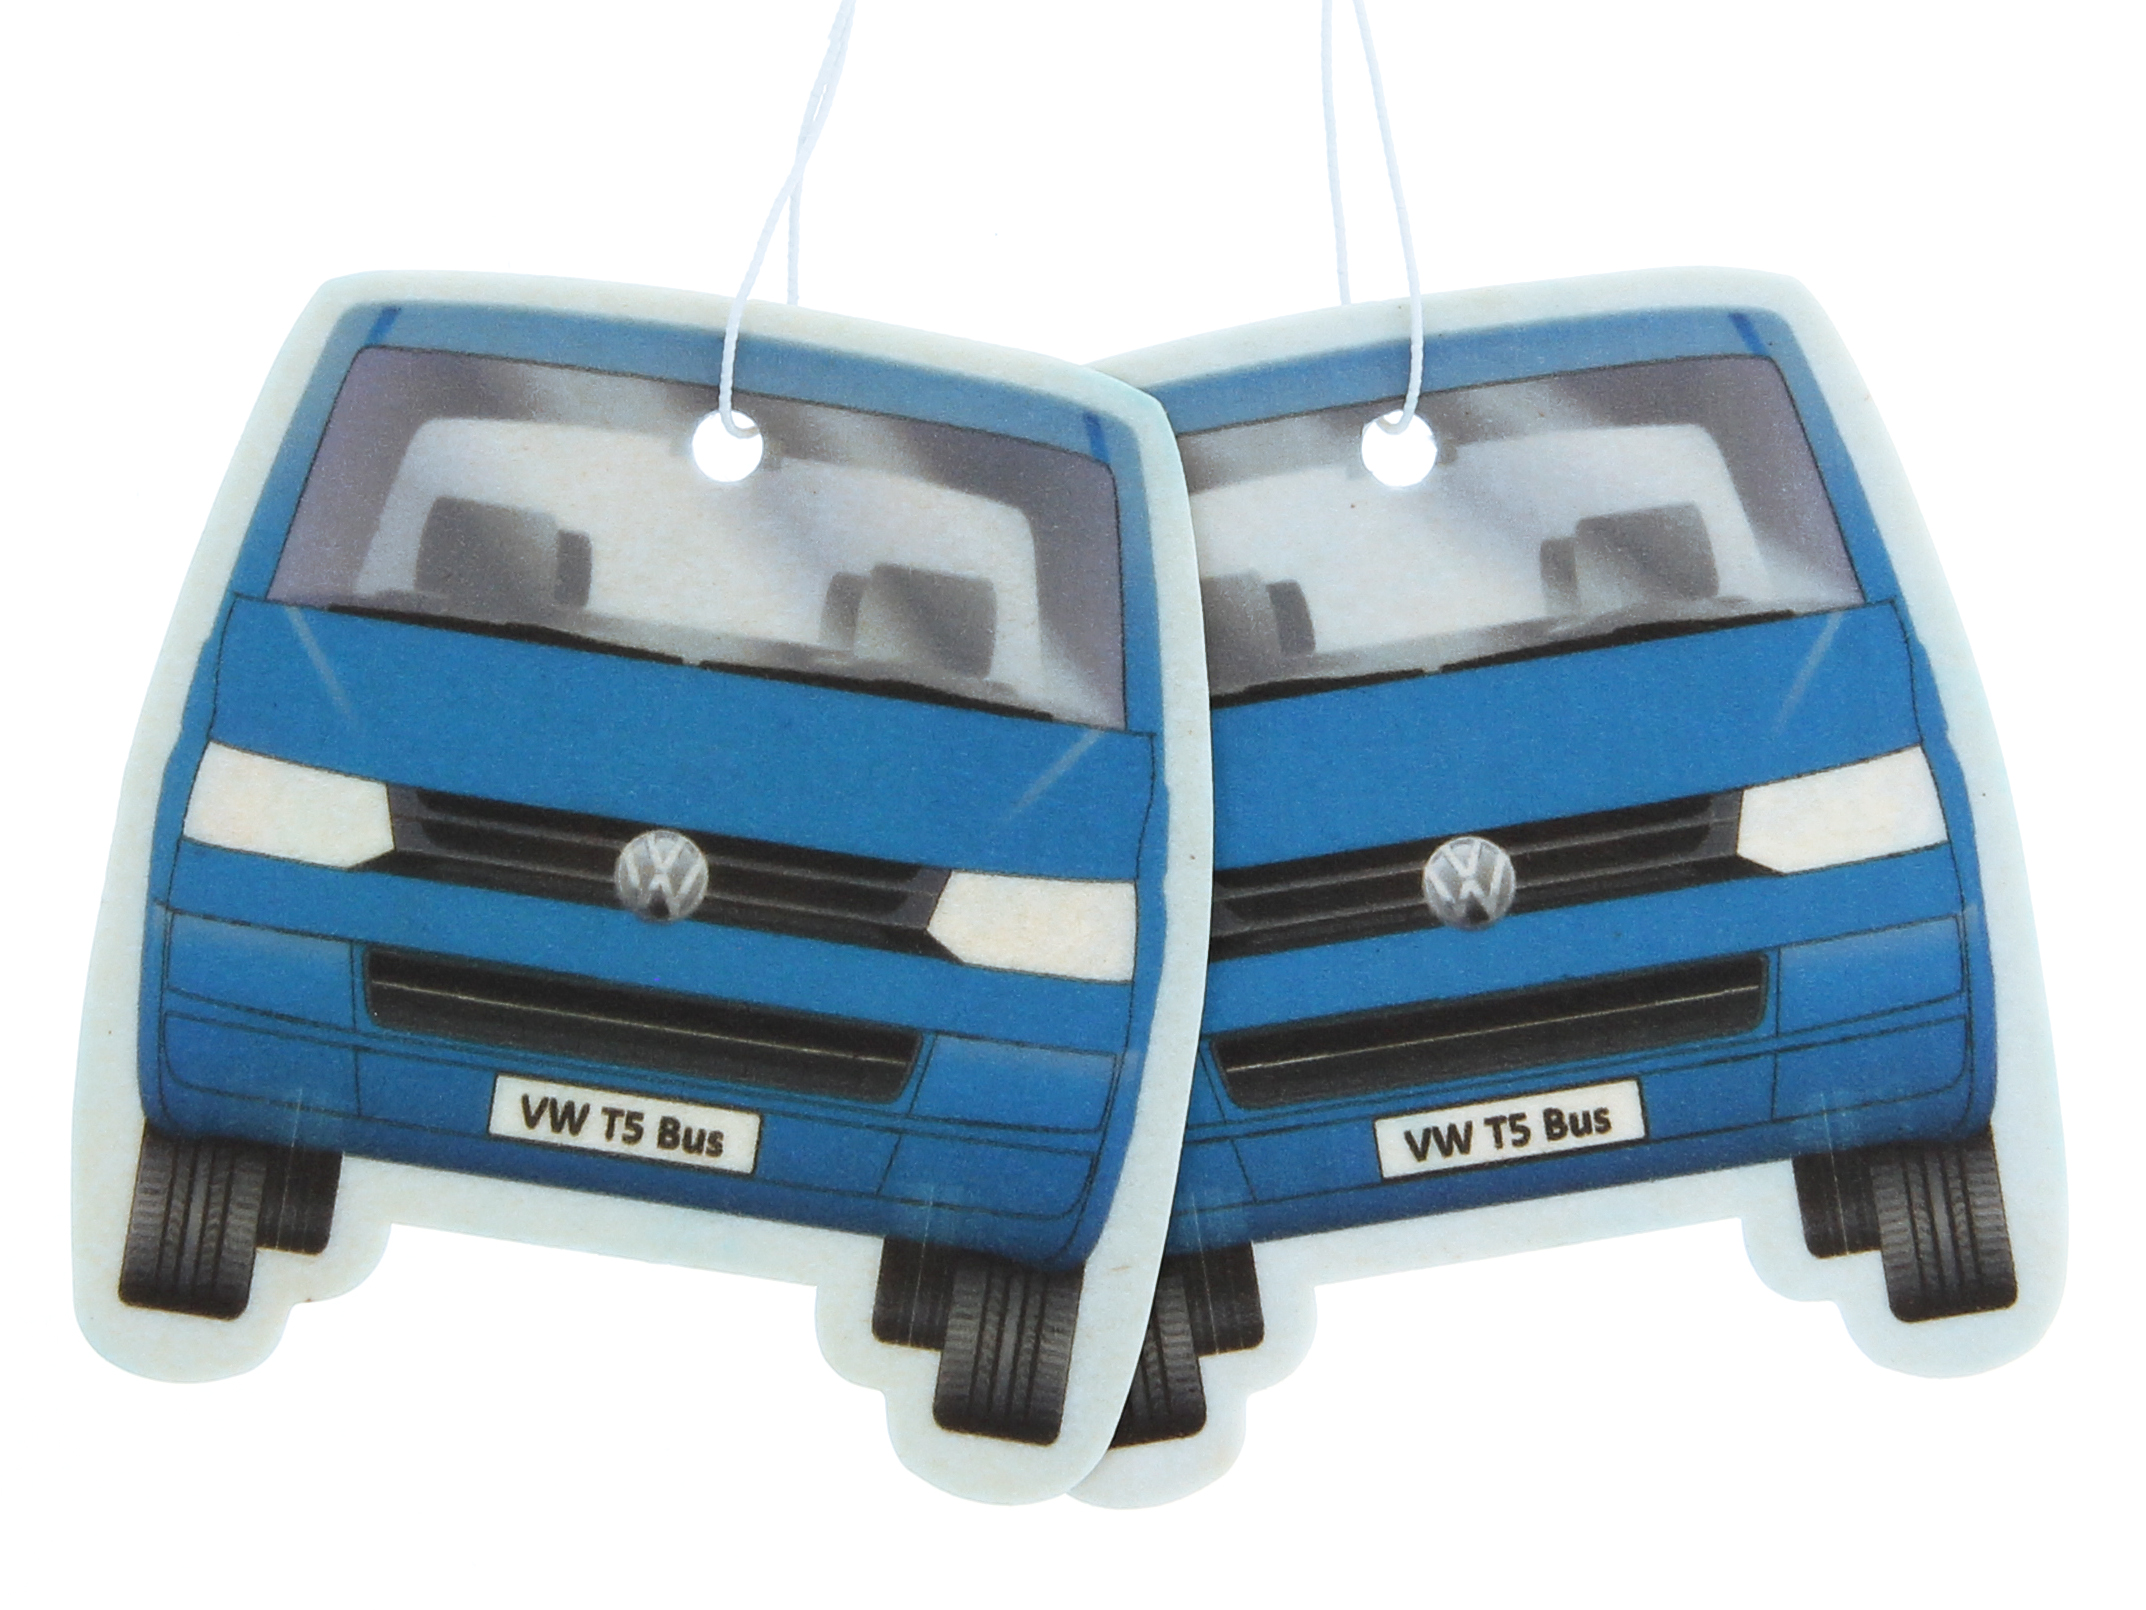 VW T5 Bulli Bus Air Freshener Set of 2